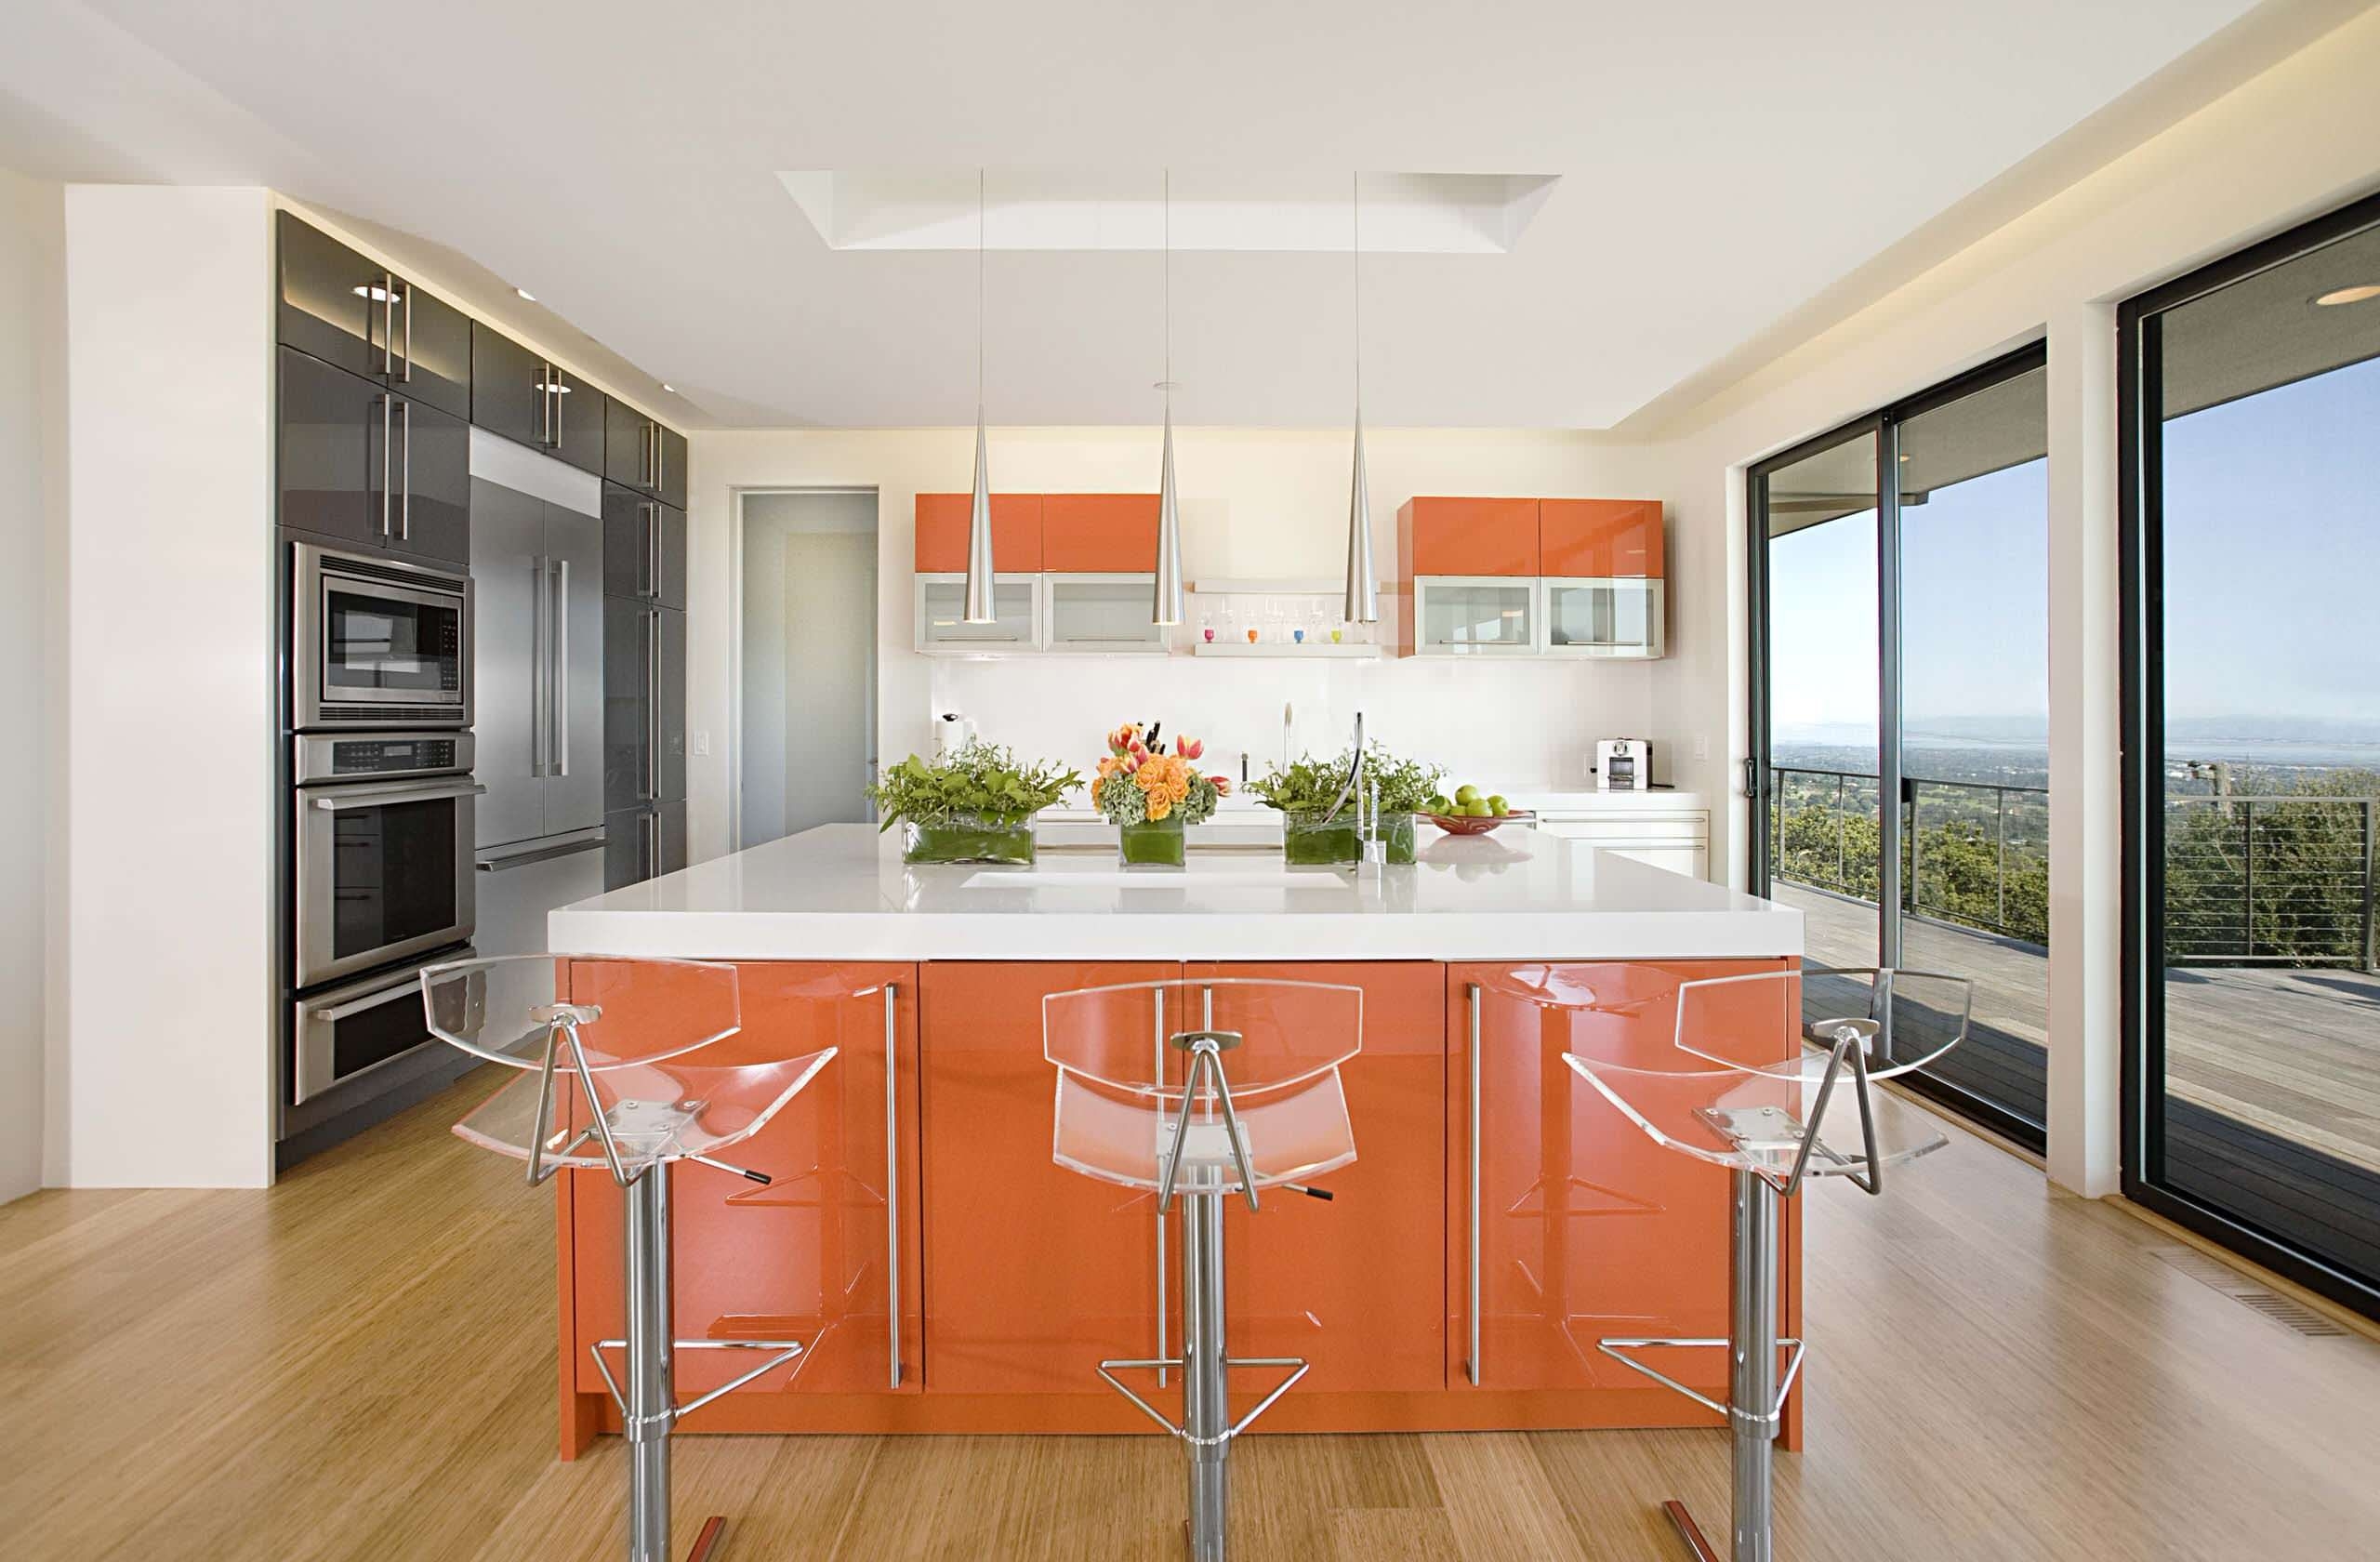 Pretty modern kitchen design interior with transparance bar stools modern